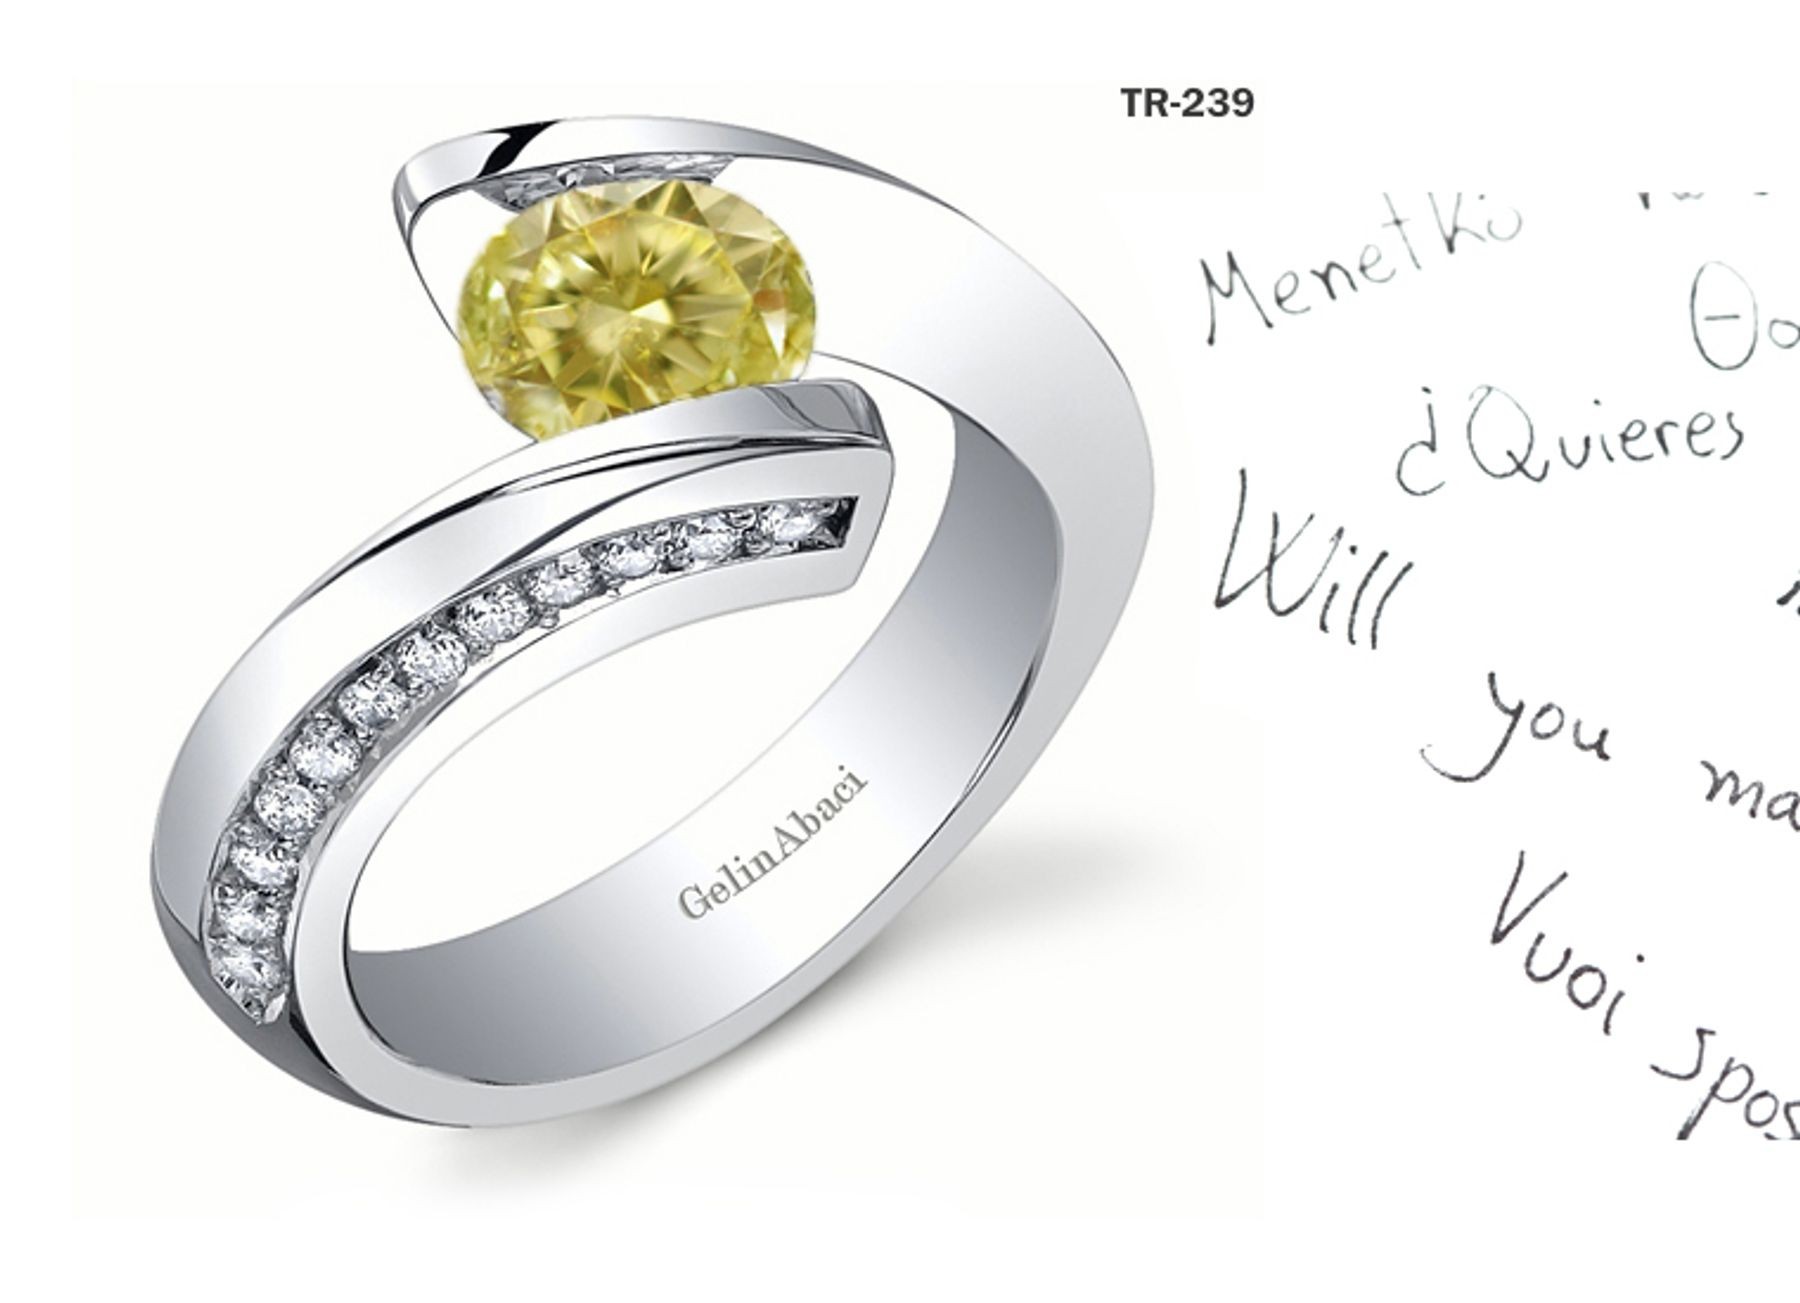 Exclusive Design Tension Set Jewelry: Tension Set Yellow Diamond Rings